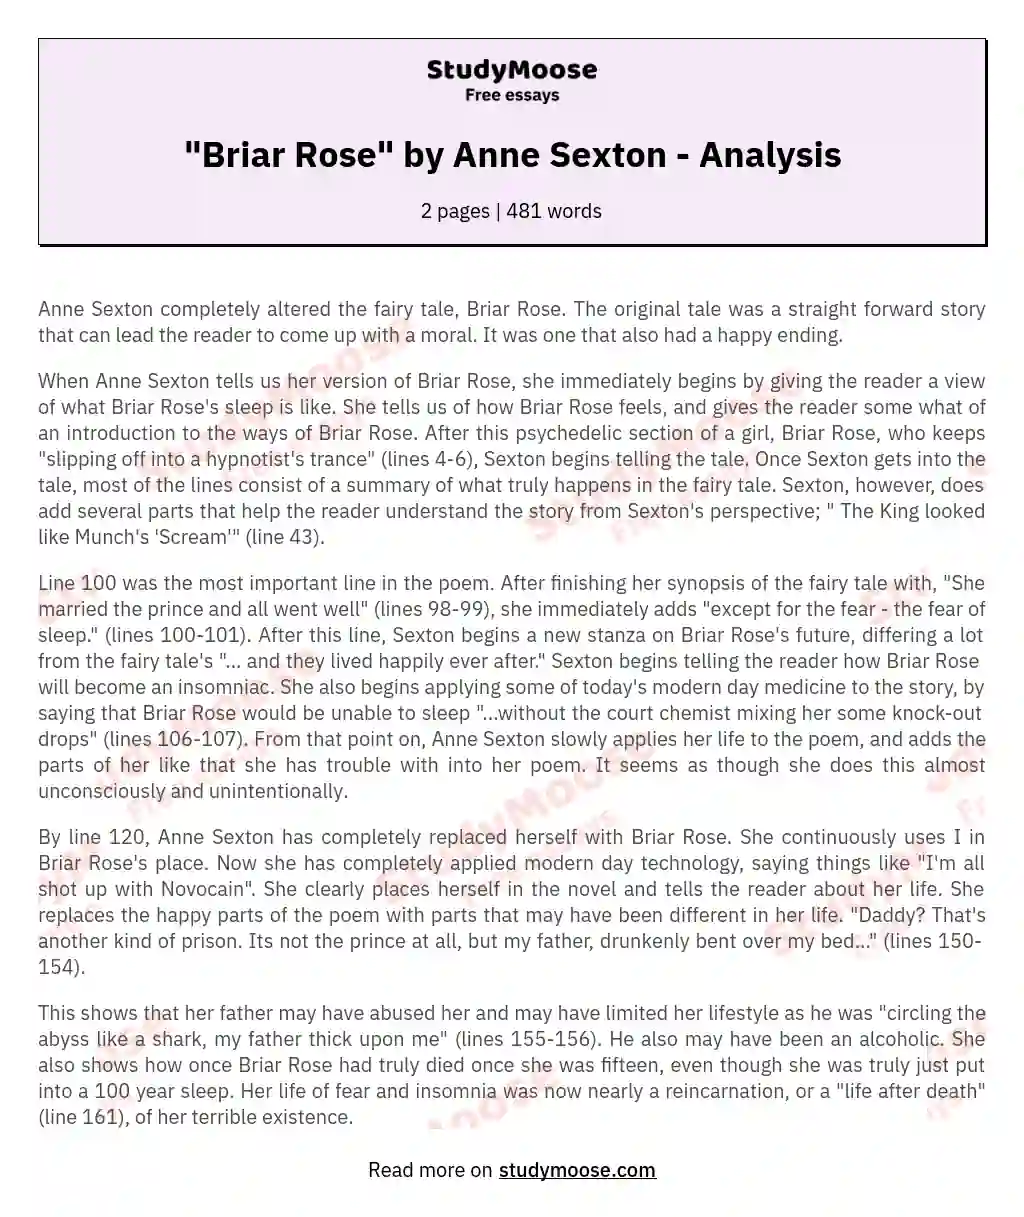 "Briar Rose" by Anne Sexton - Analysis essay